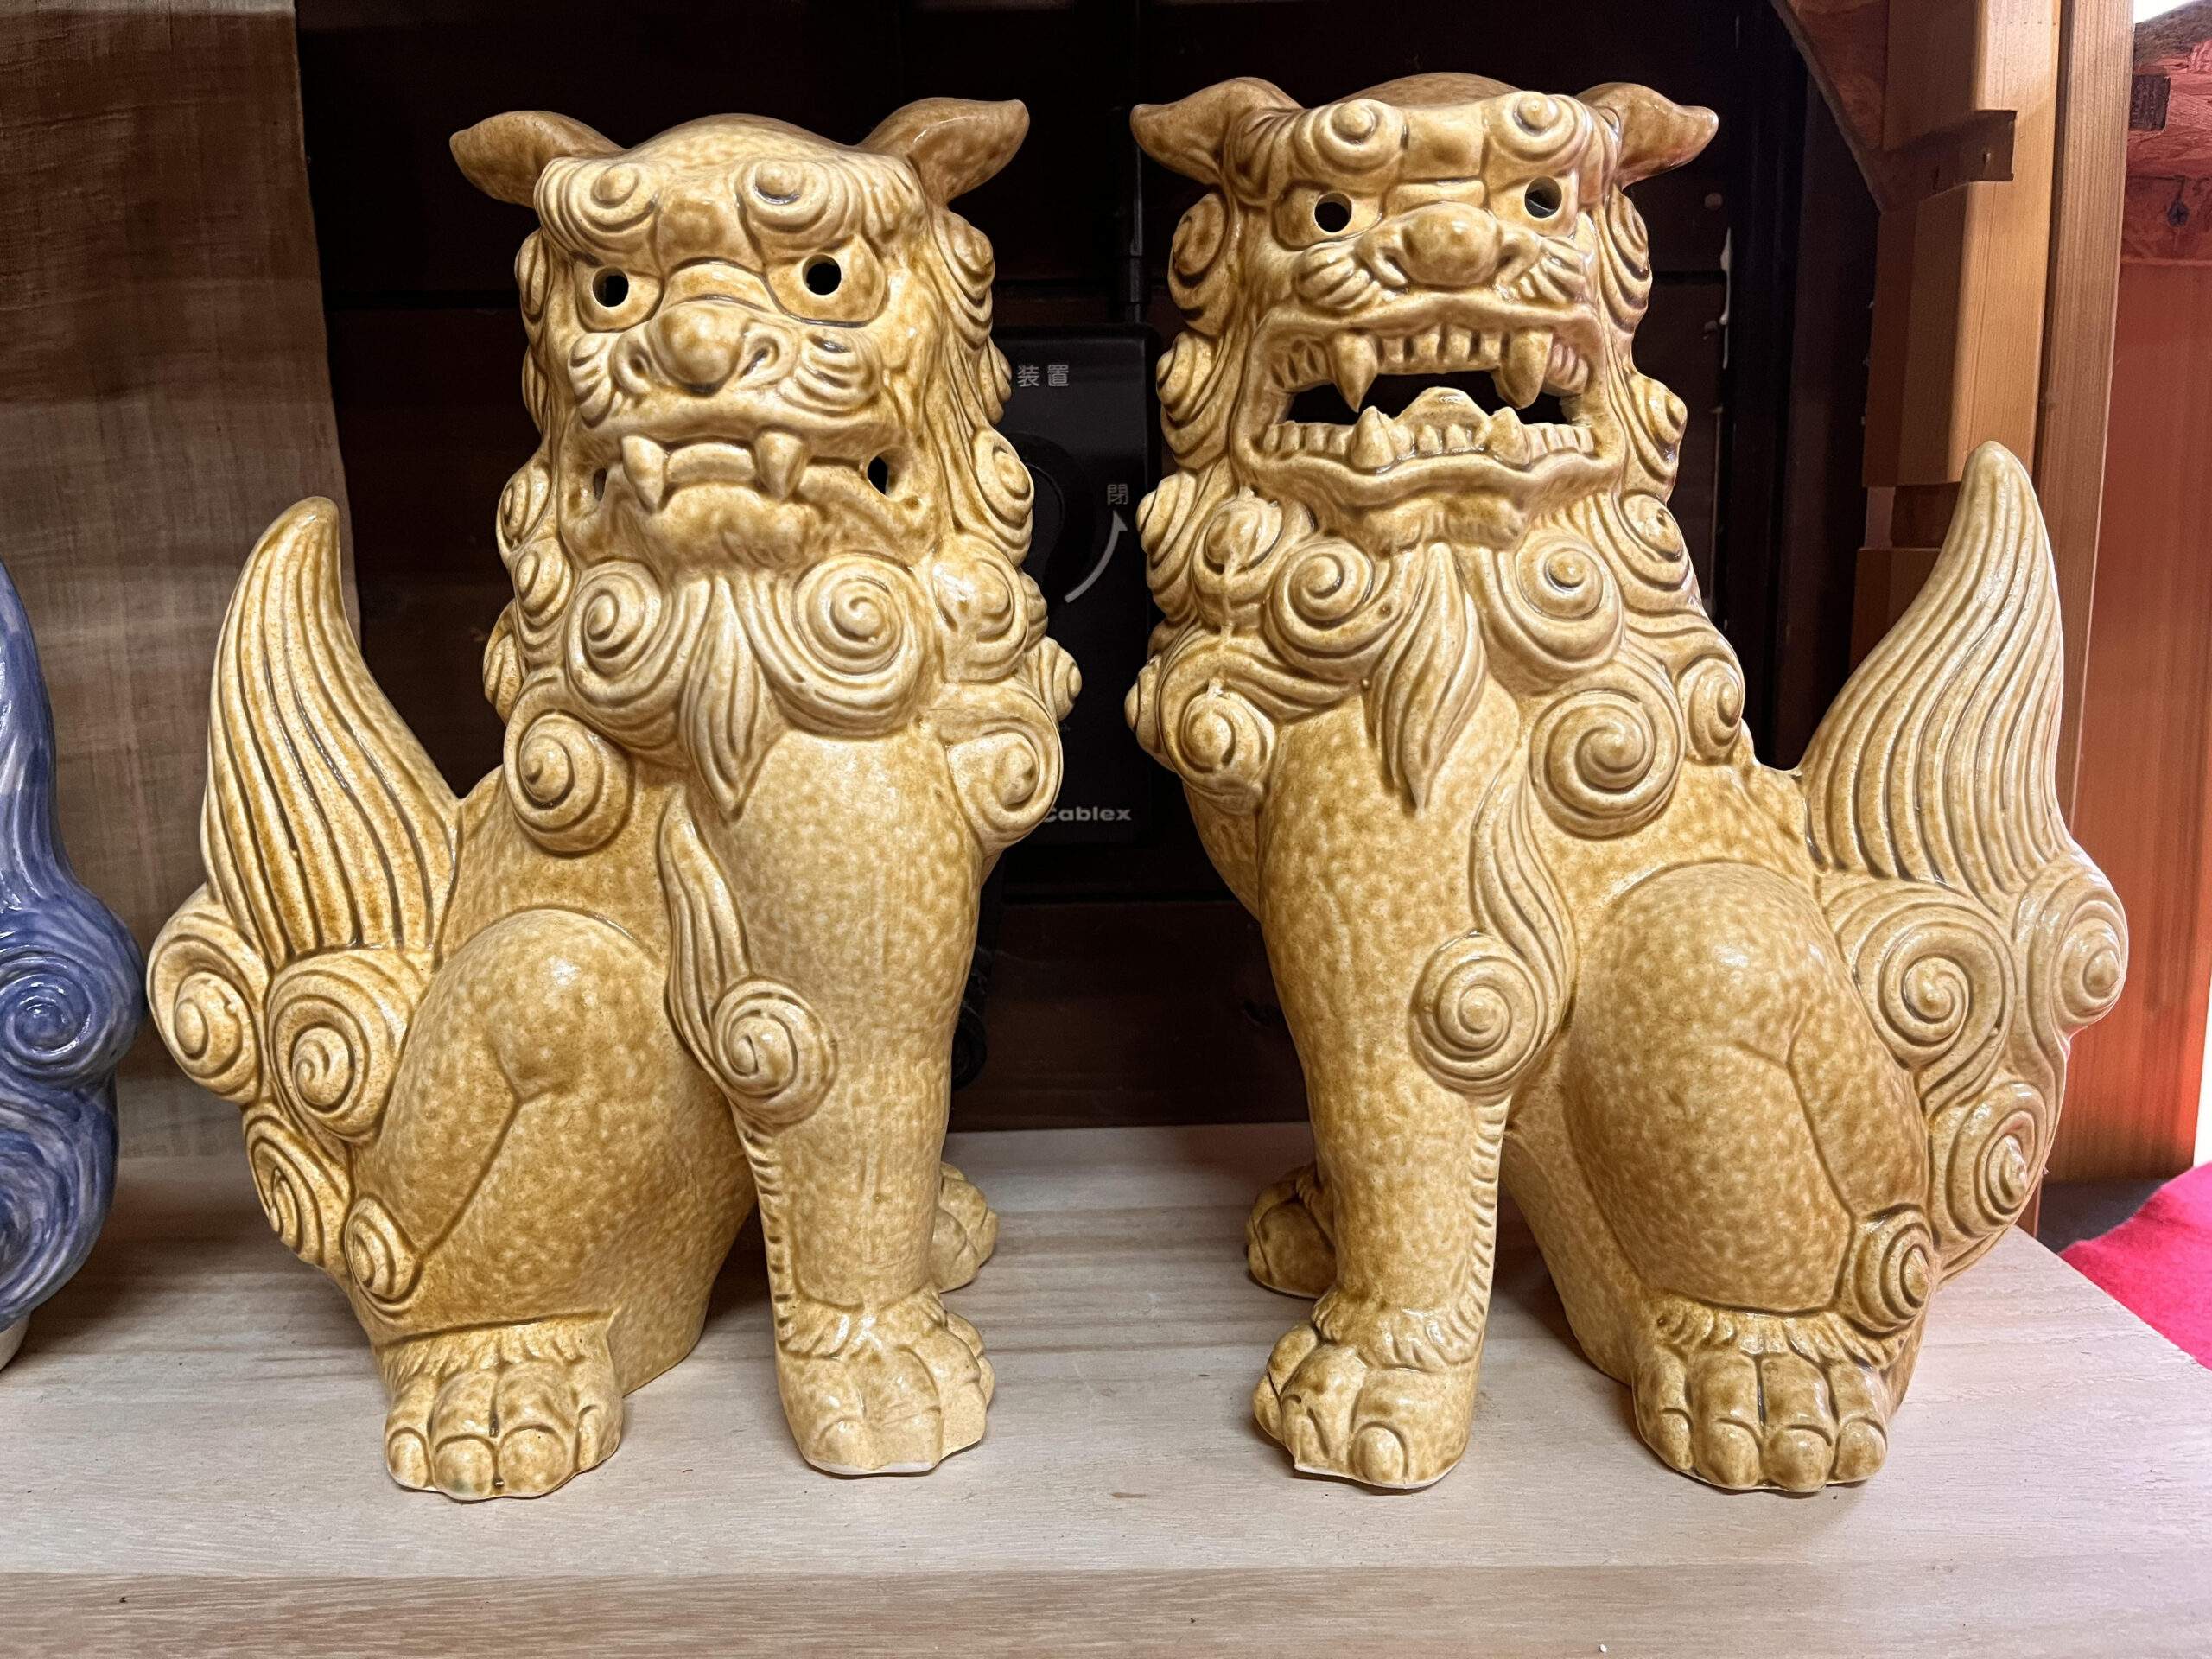 Shisas are Okinawan guardian lions